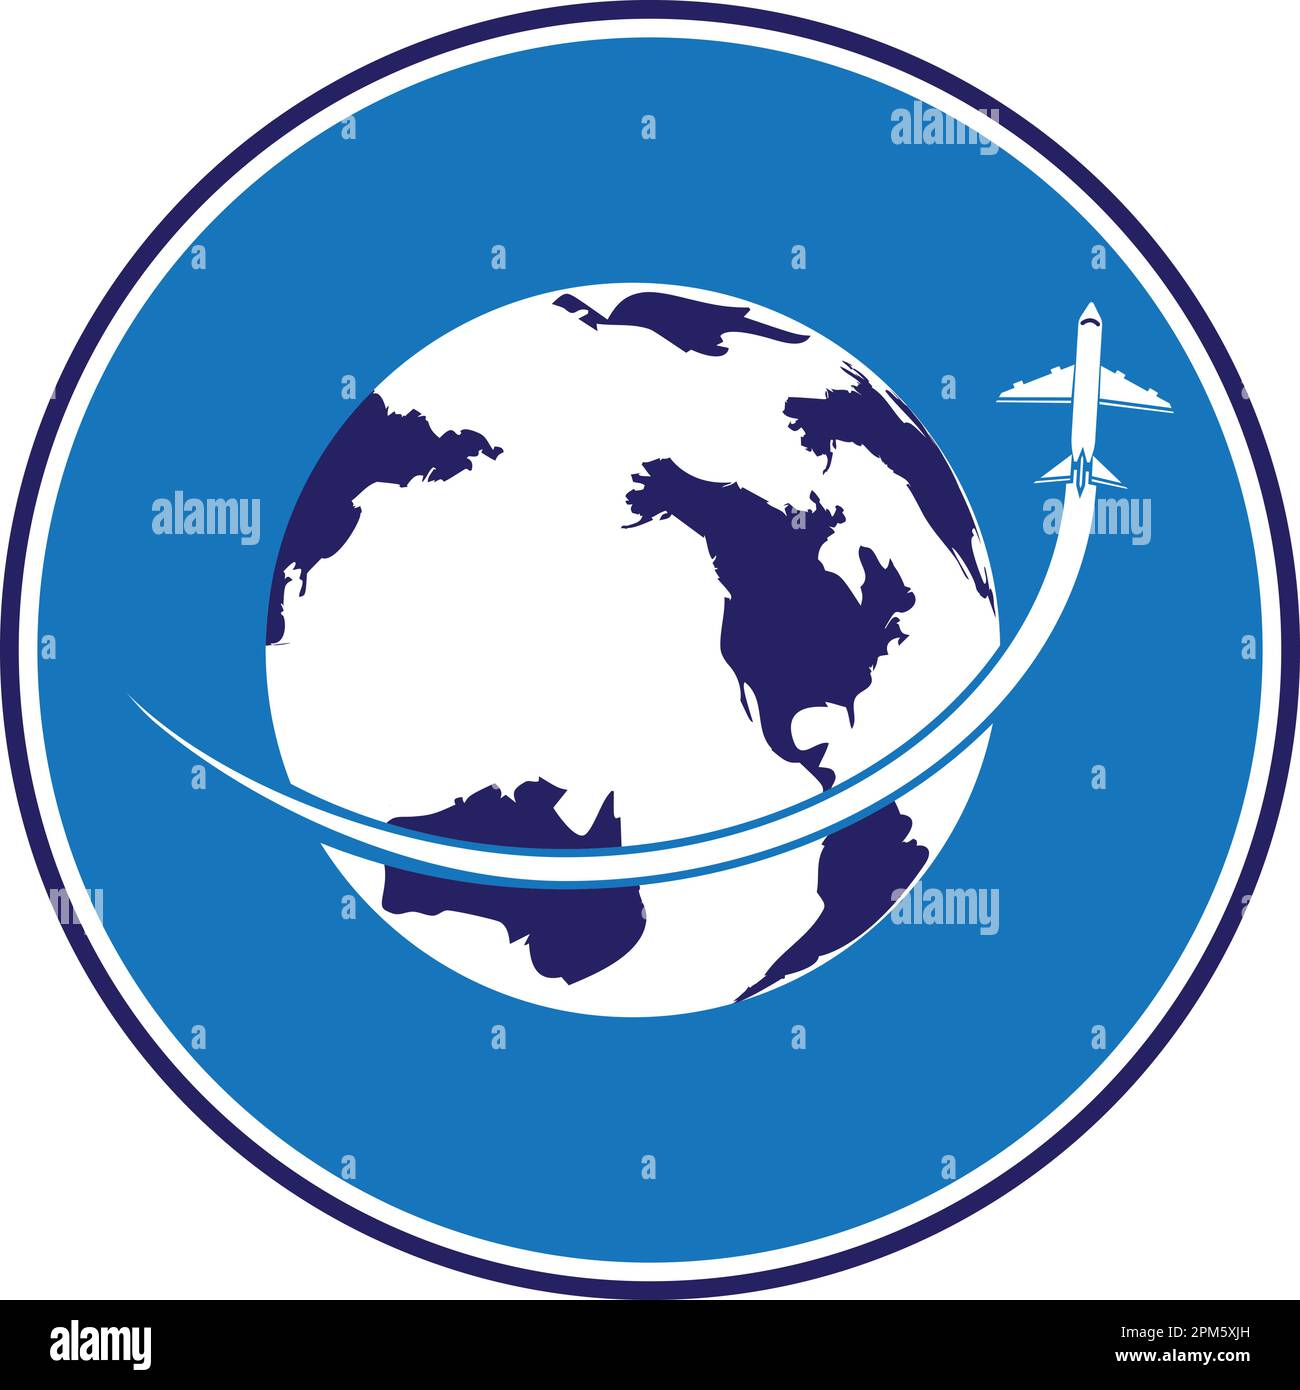 Vorlage für das Vektorlogo von Reisebüros. Weihnachtslogo Vorlage Globe Travel Logo Vektordesign. Stock Vektor